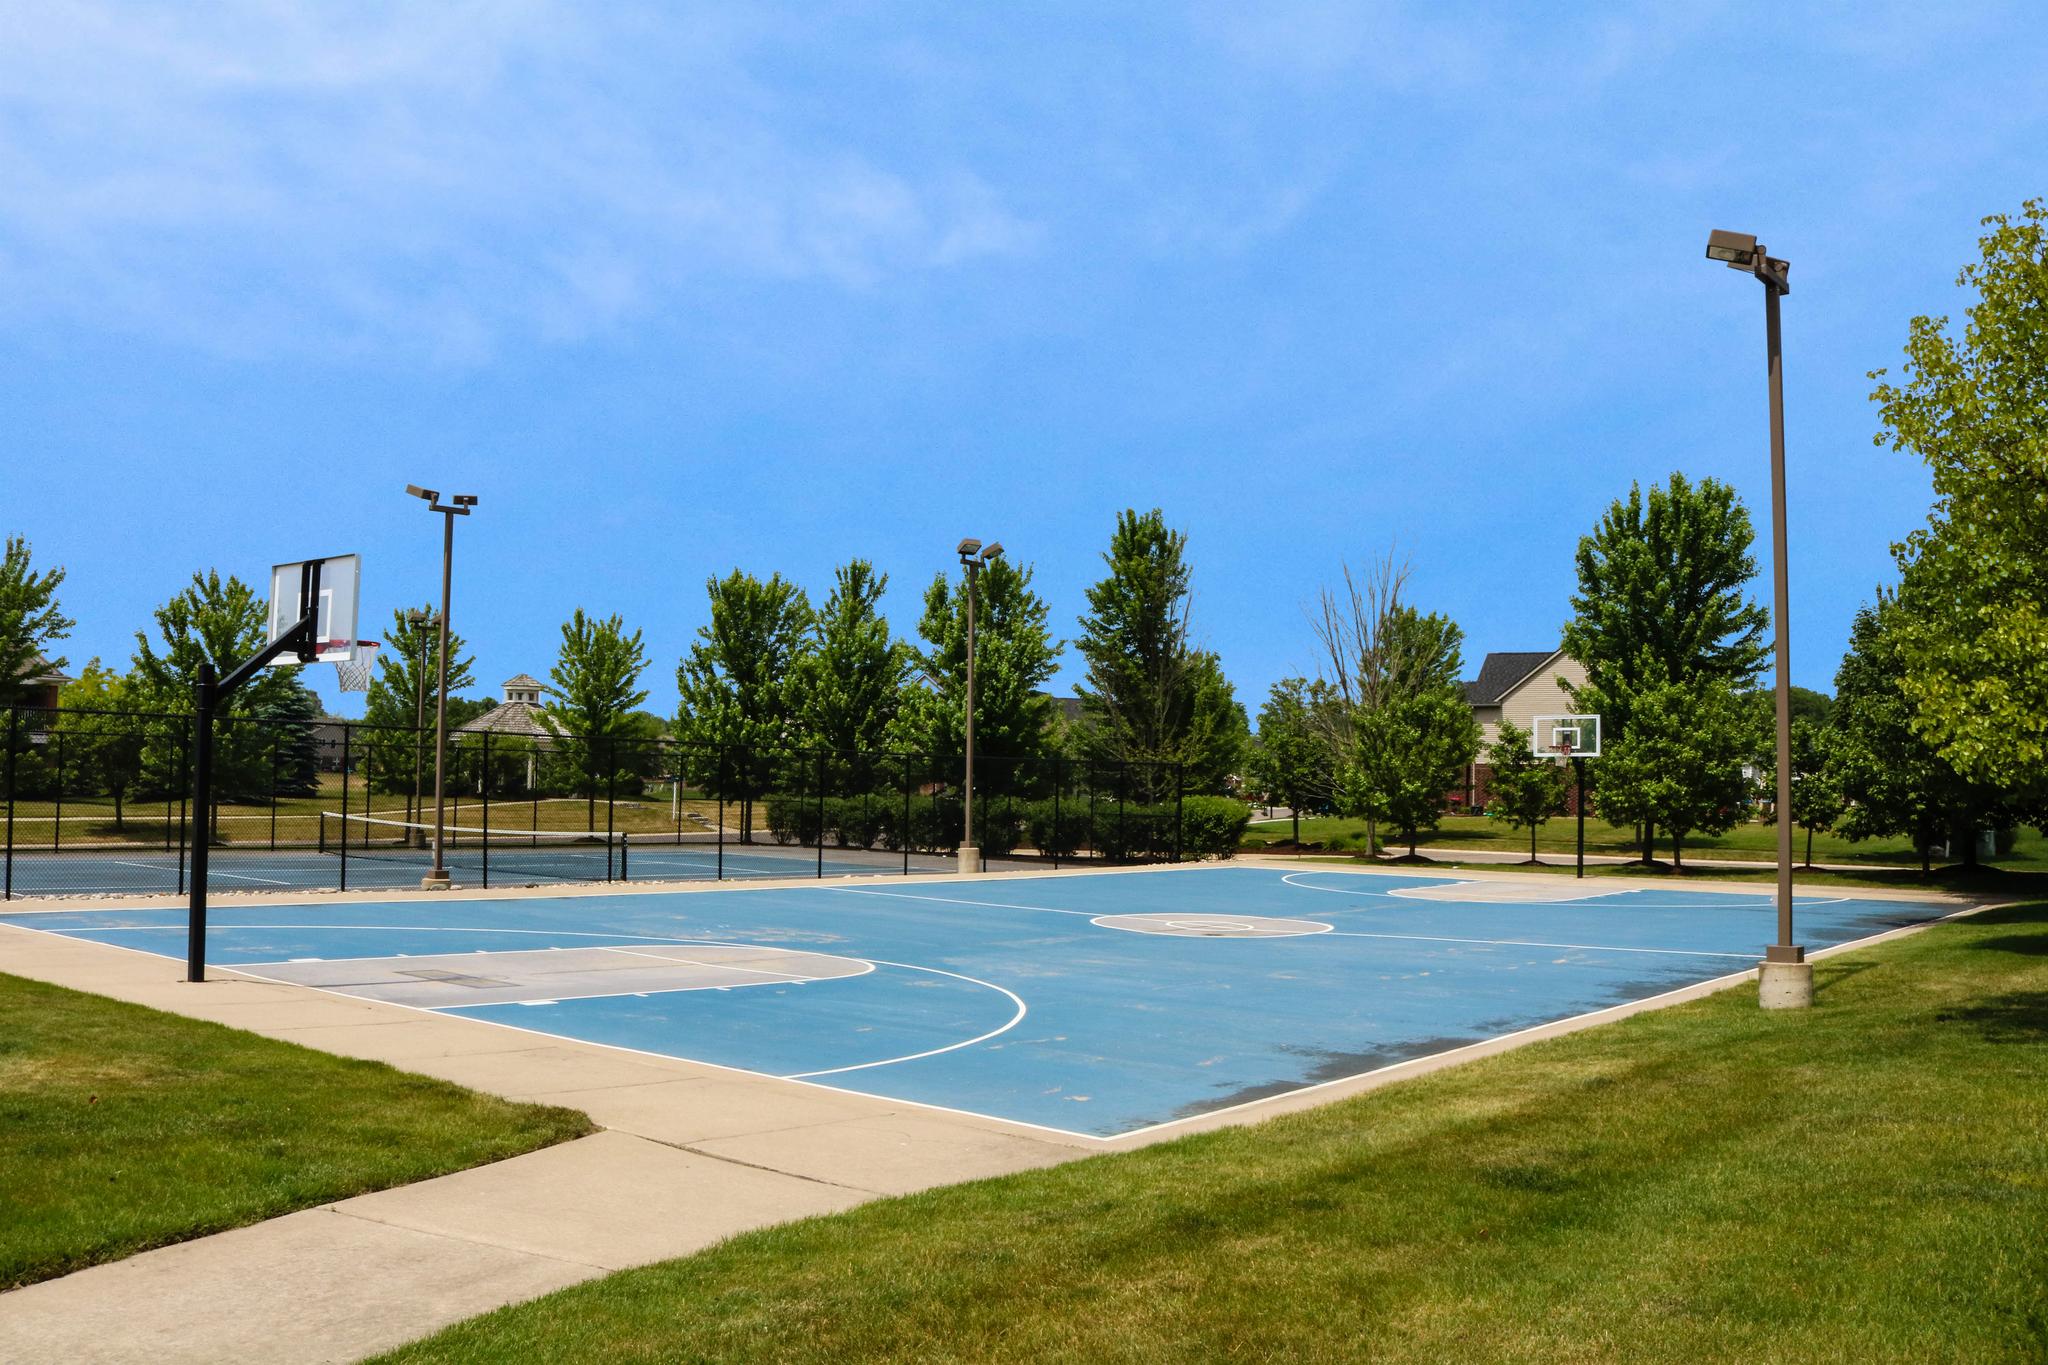 Mill River basketball court